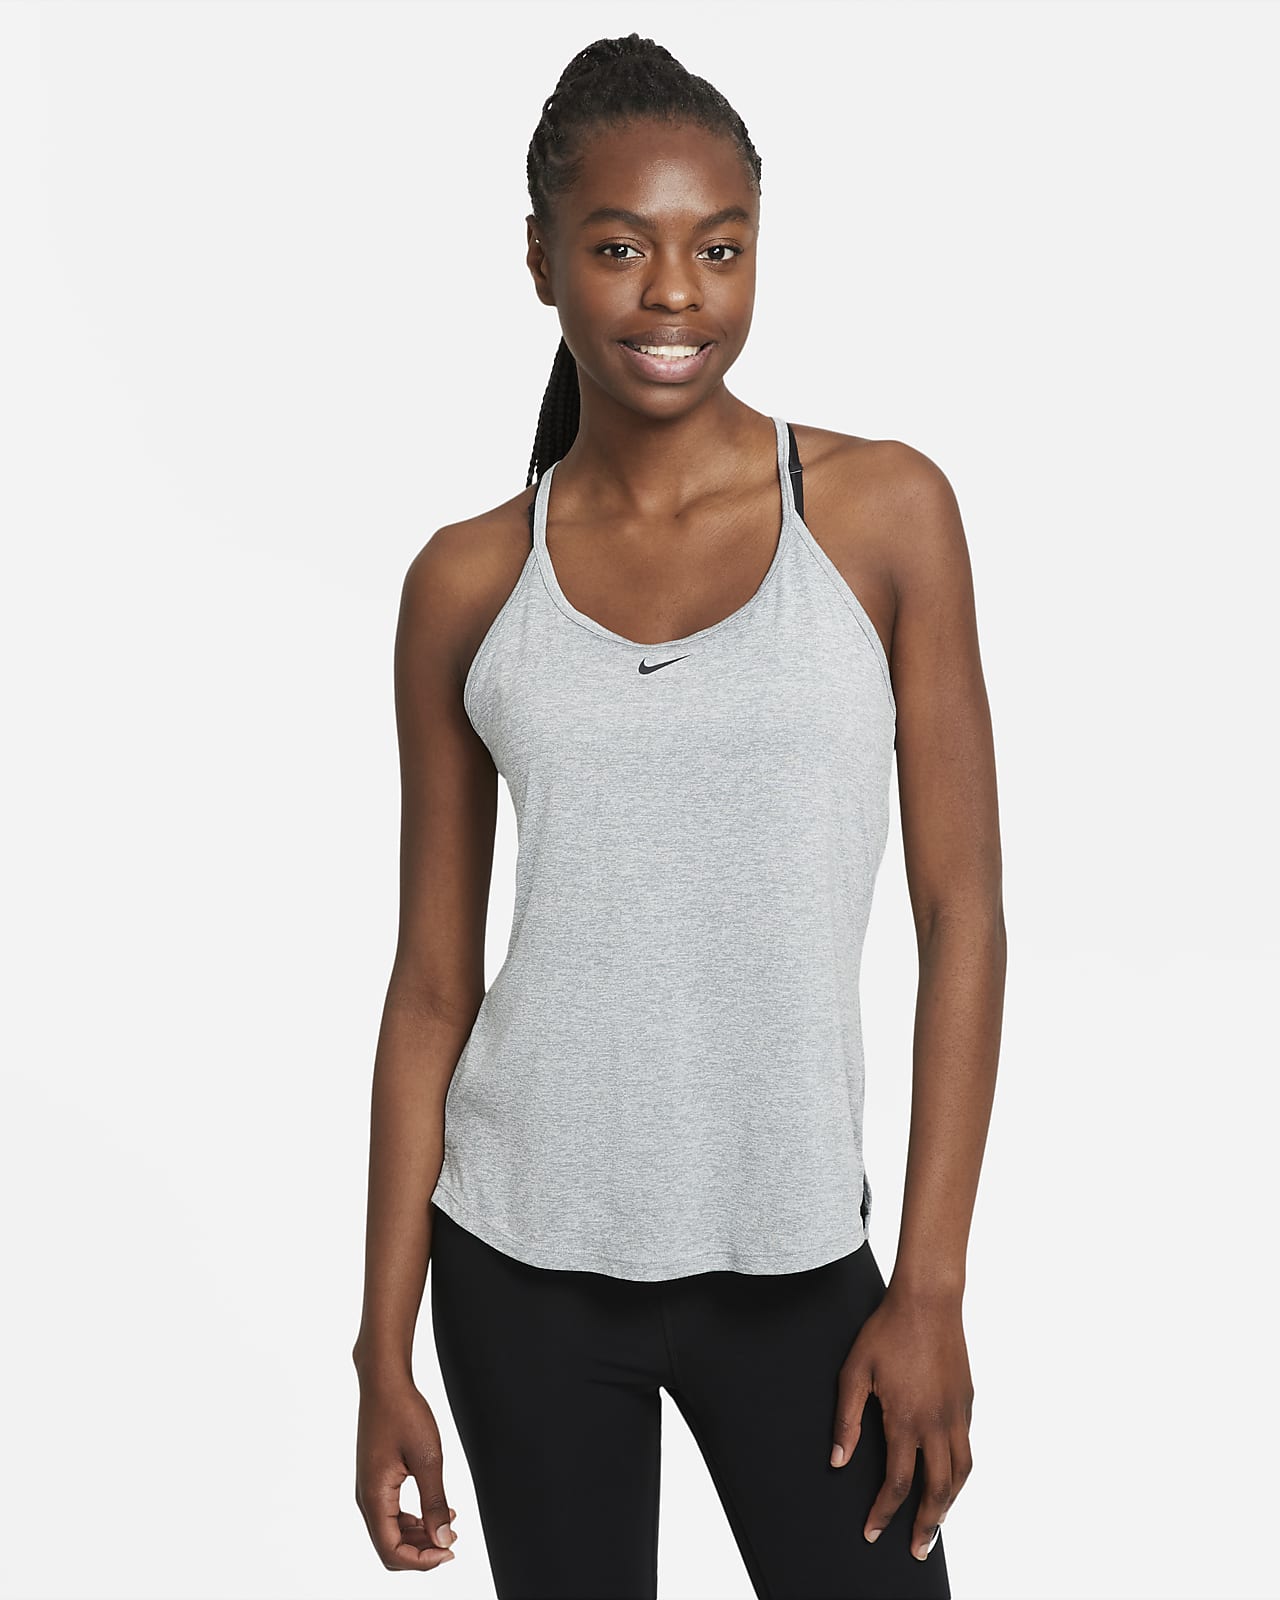 Nike Womens One Slim Tank Top